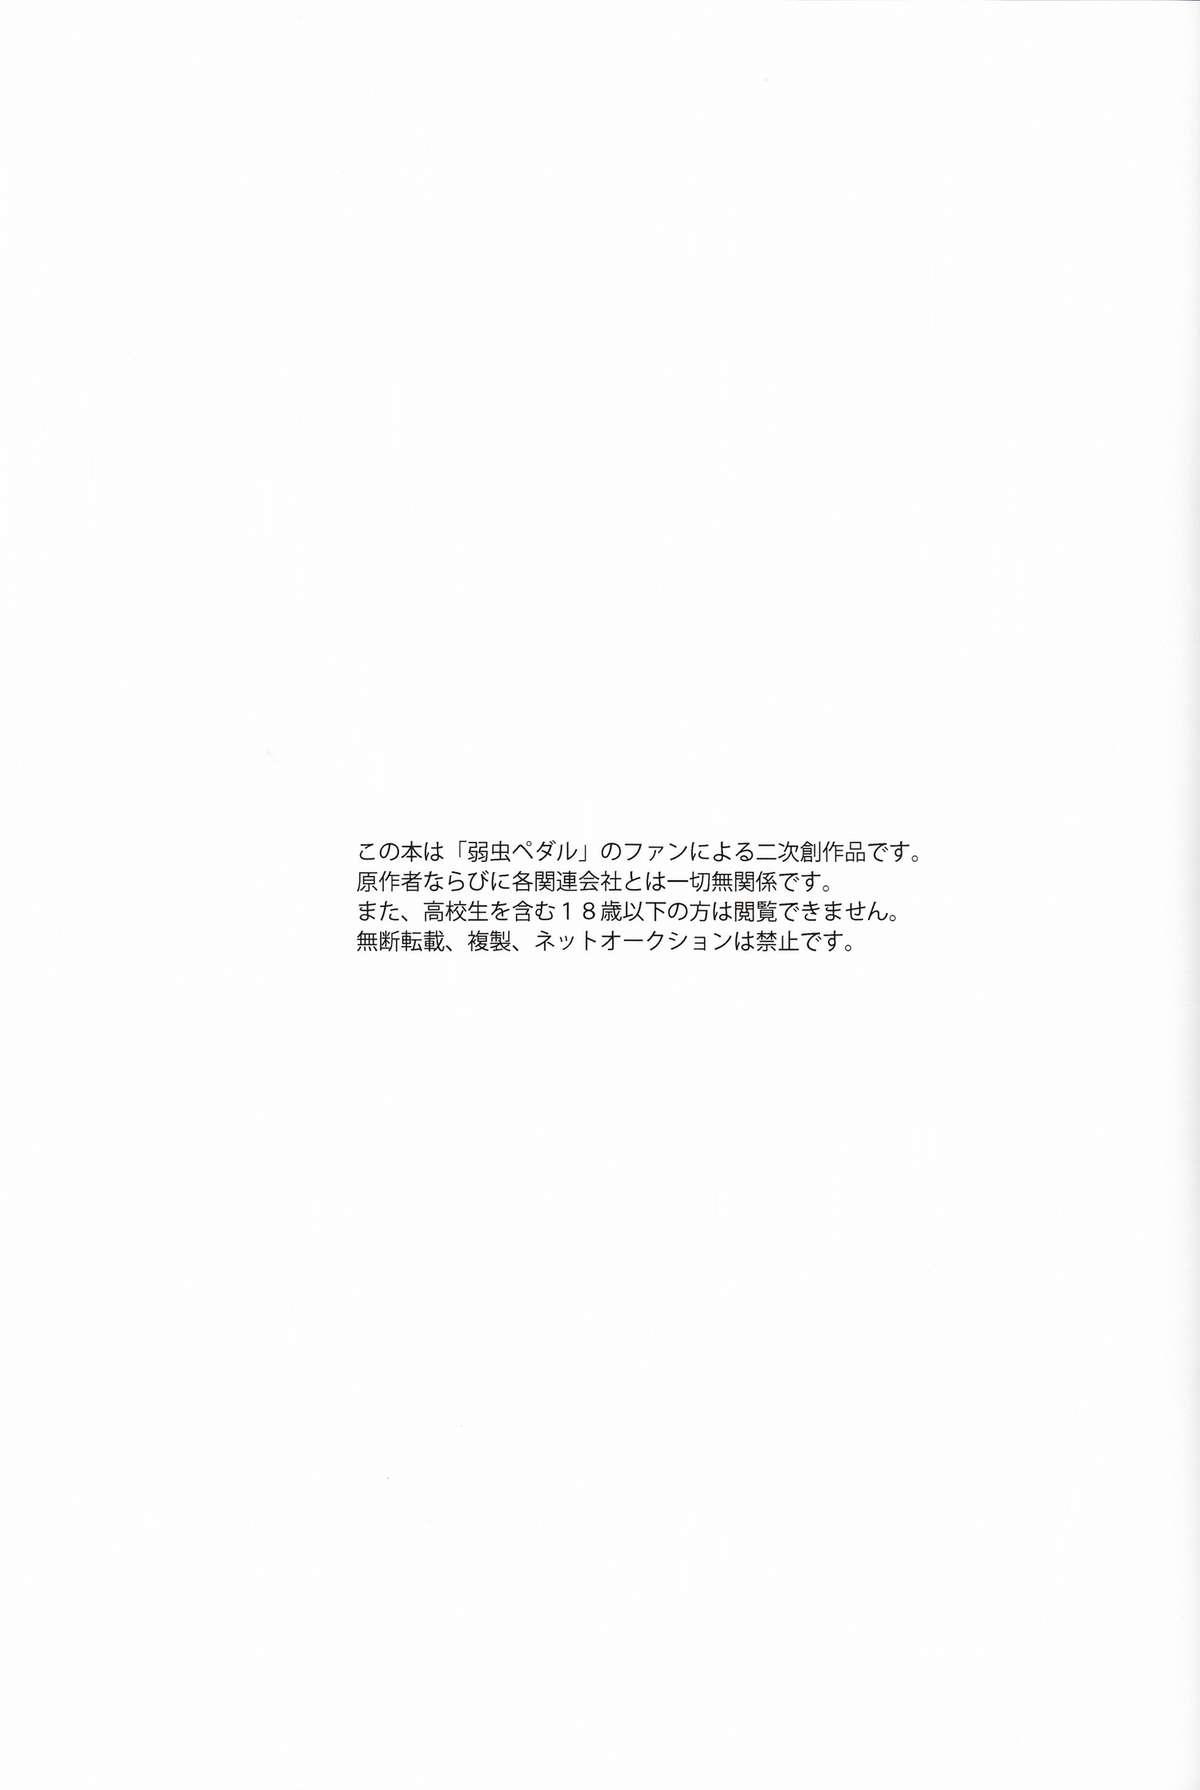 Tied Kare Ni Onetsu - Yowamushi pedal Squirt - Page 3